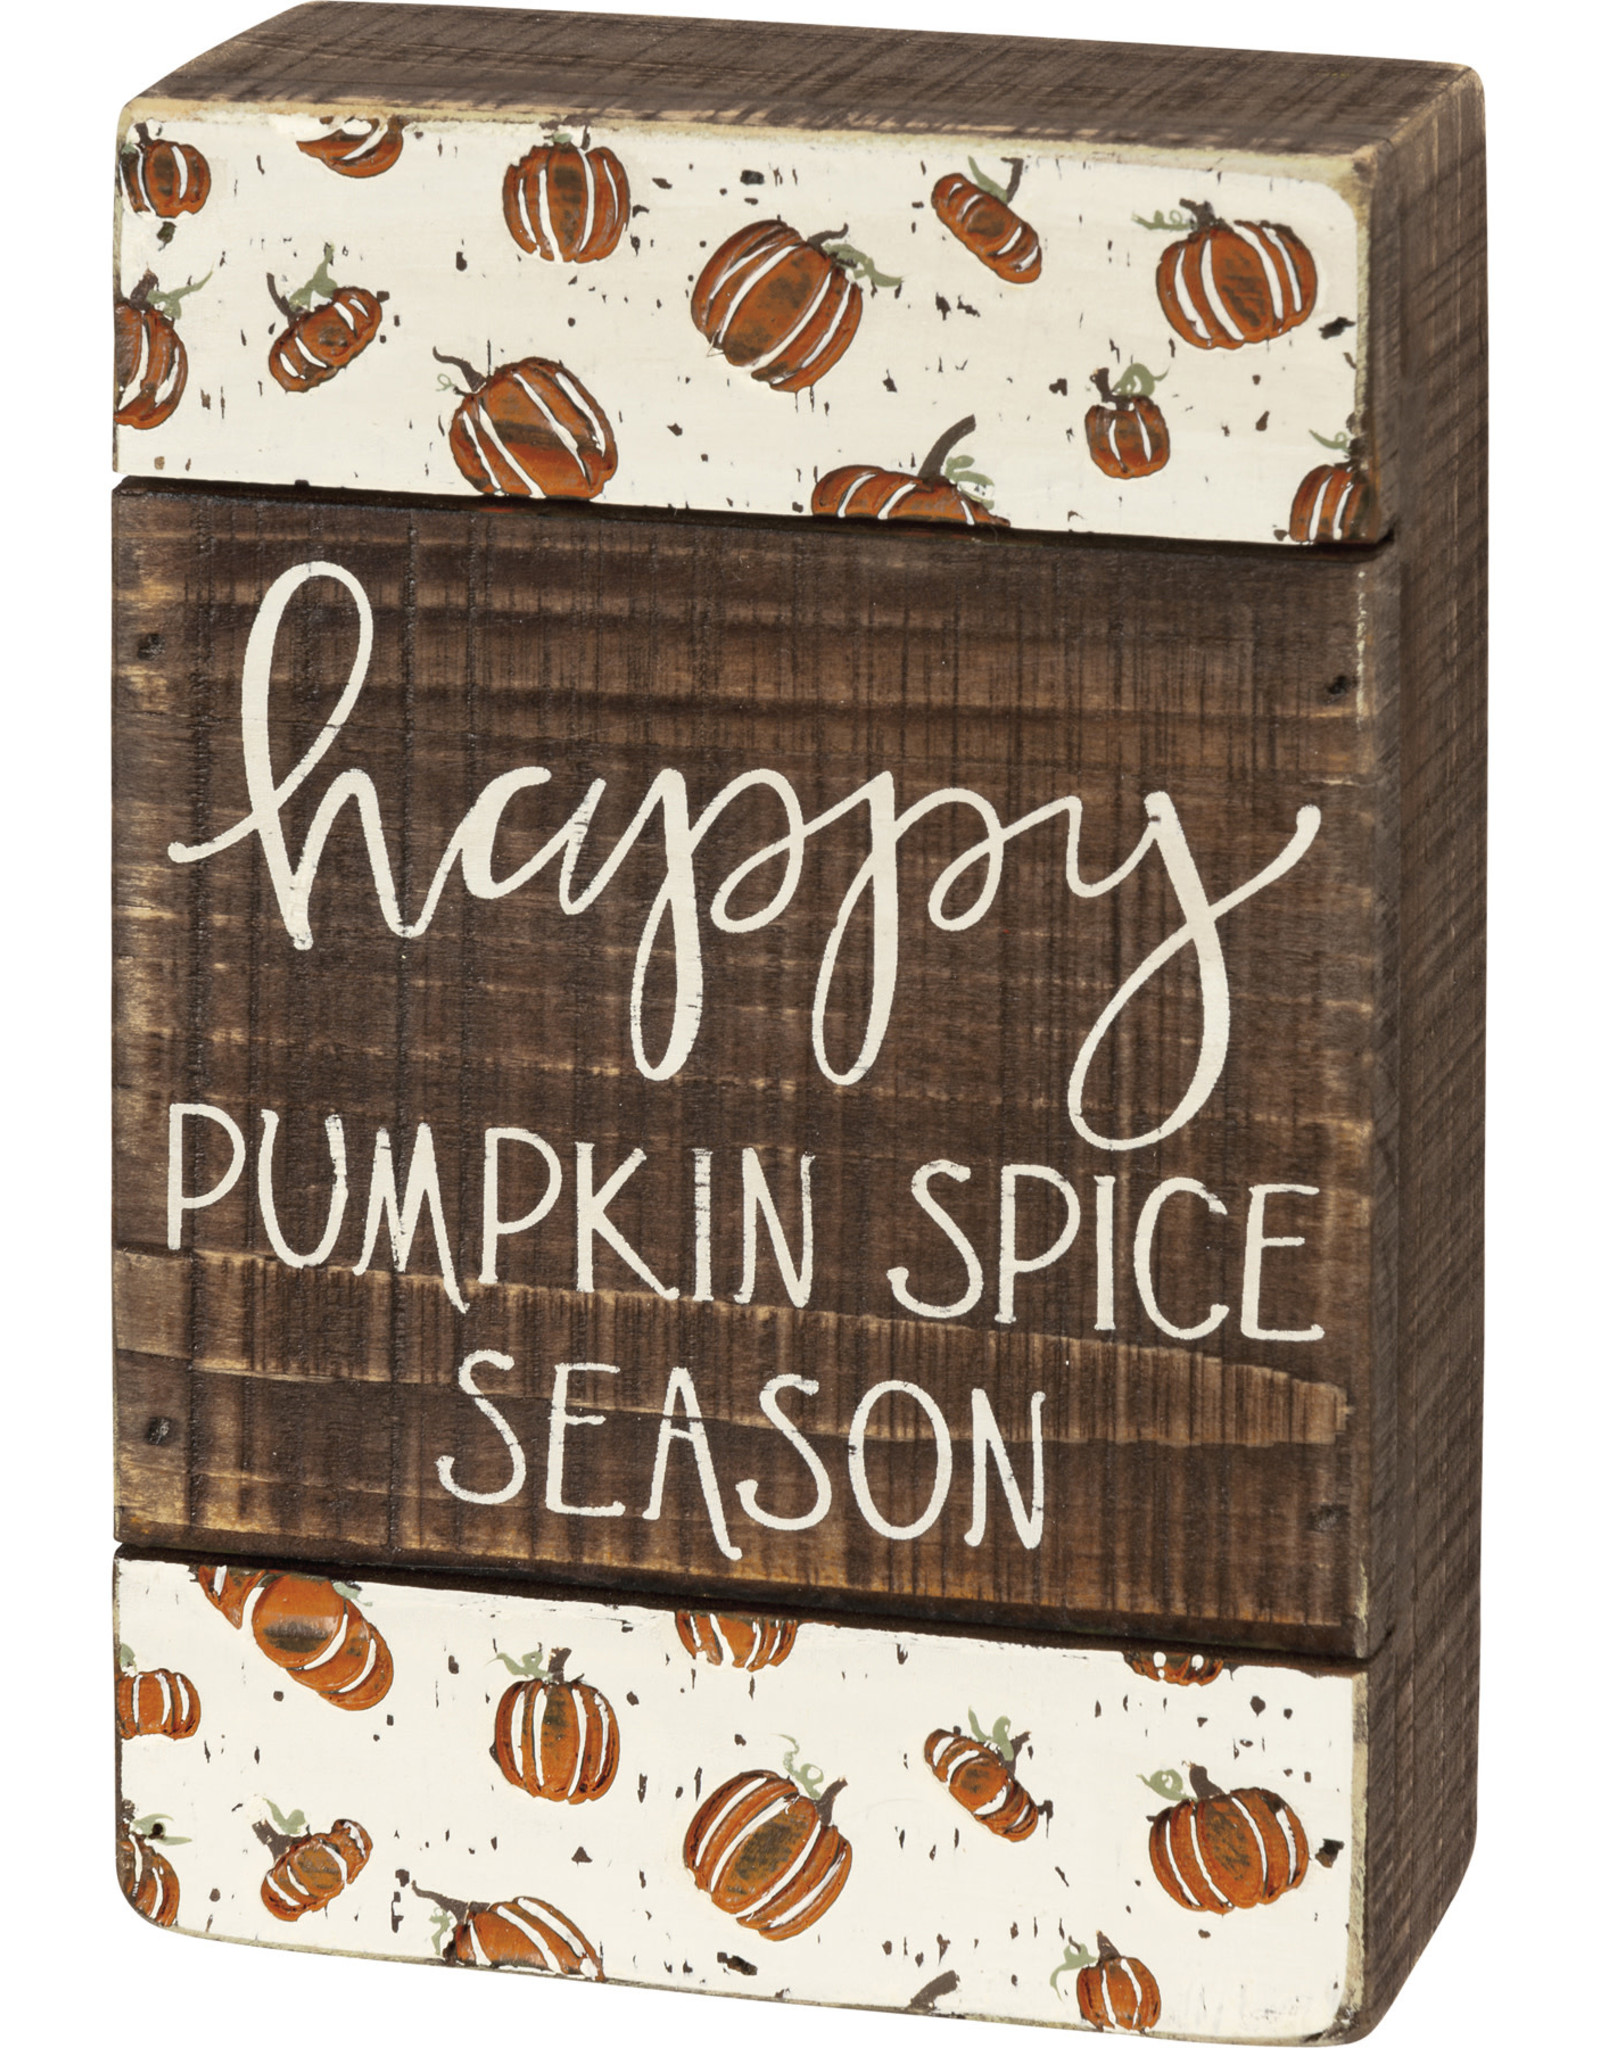 Box Sign - Happy Pumpkin Spice Season